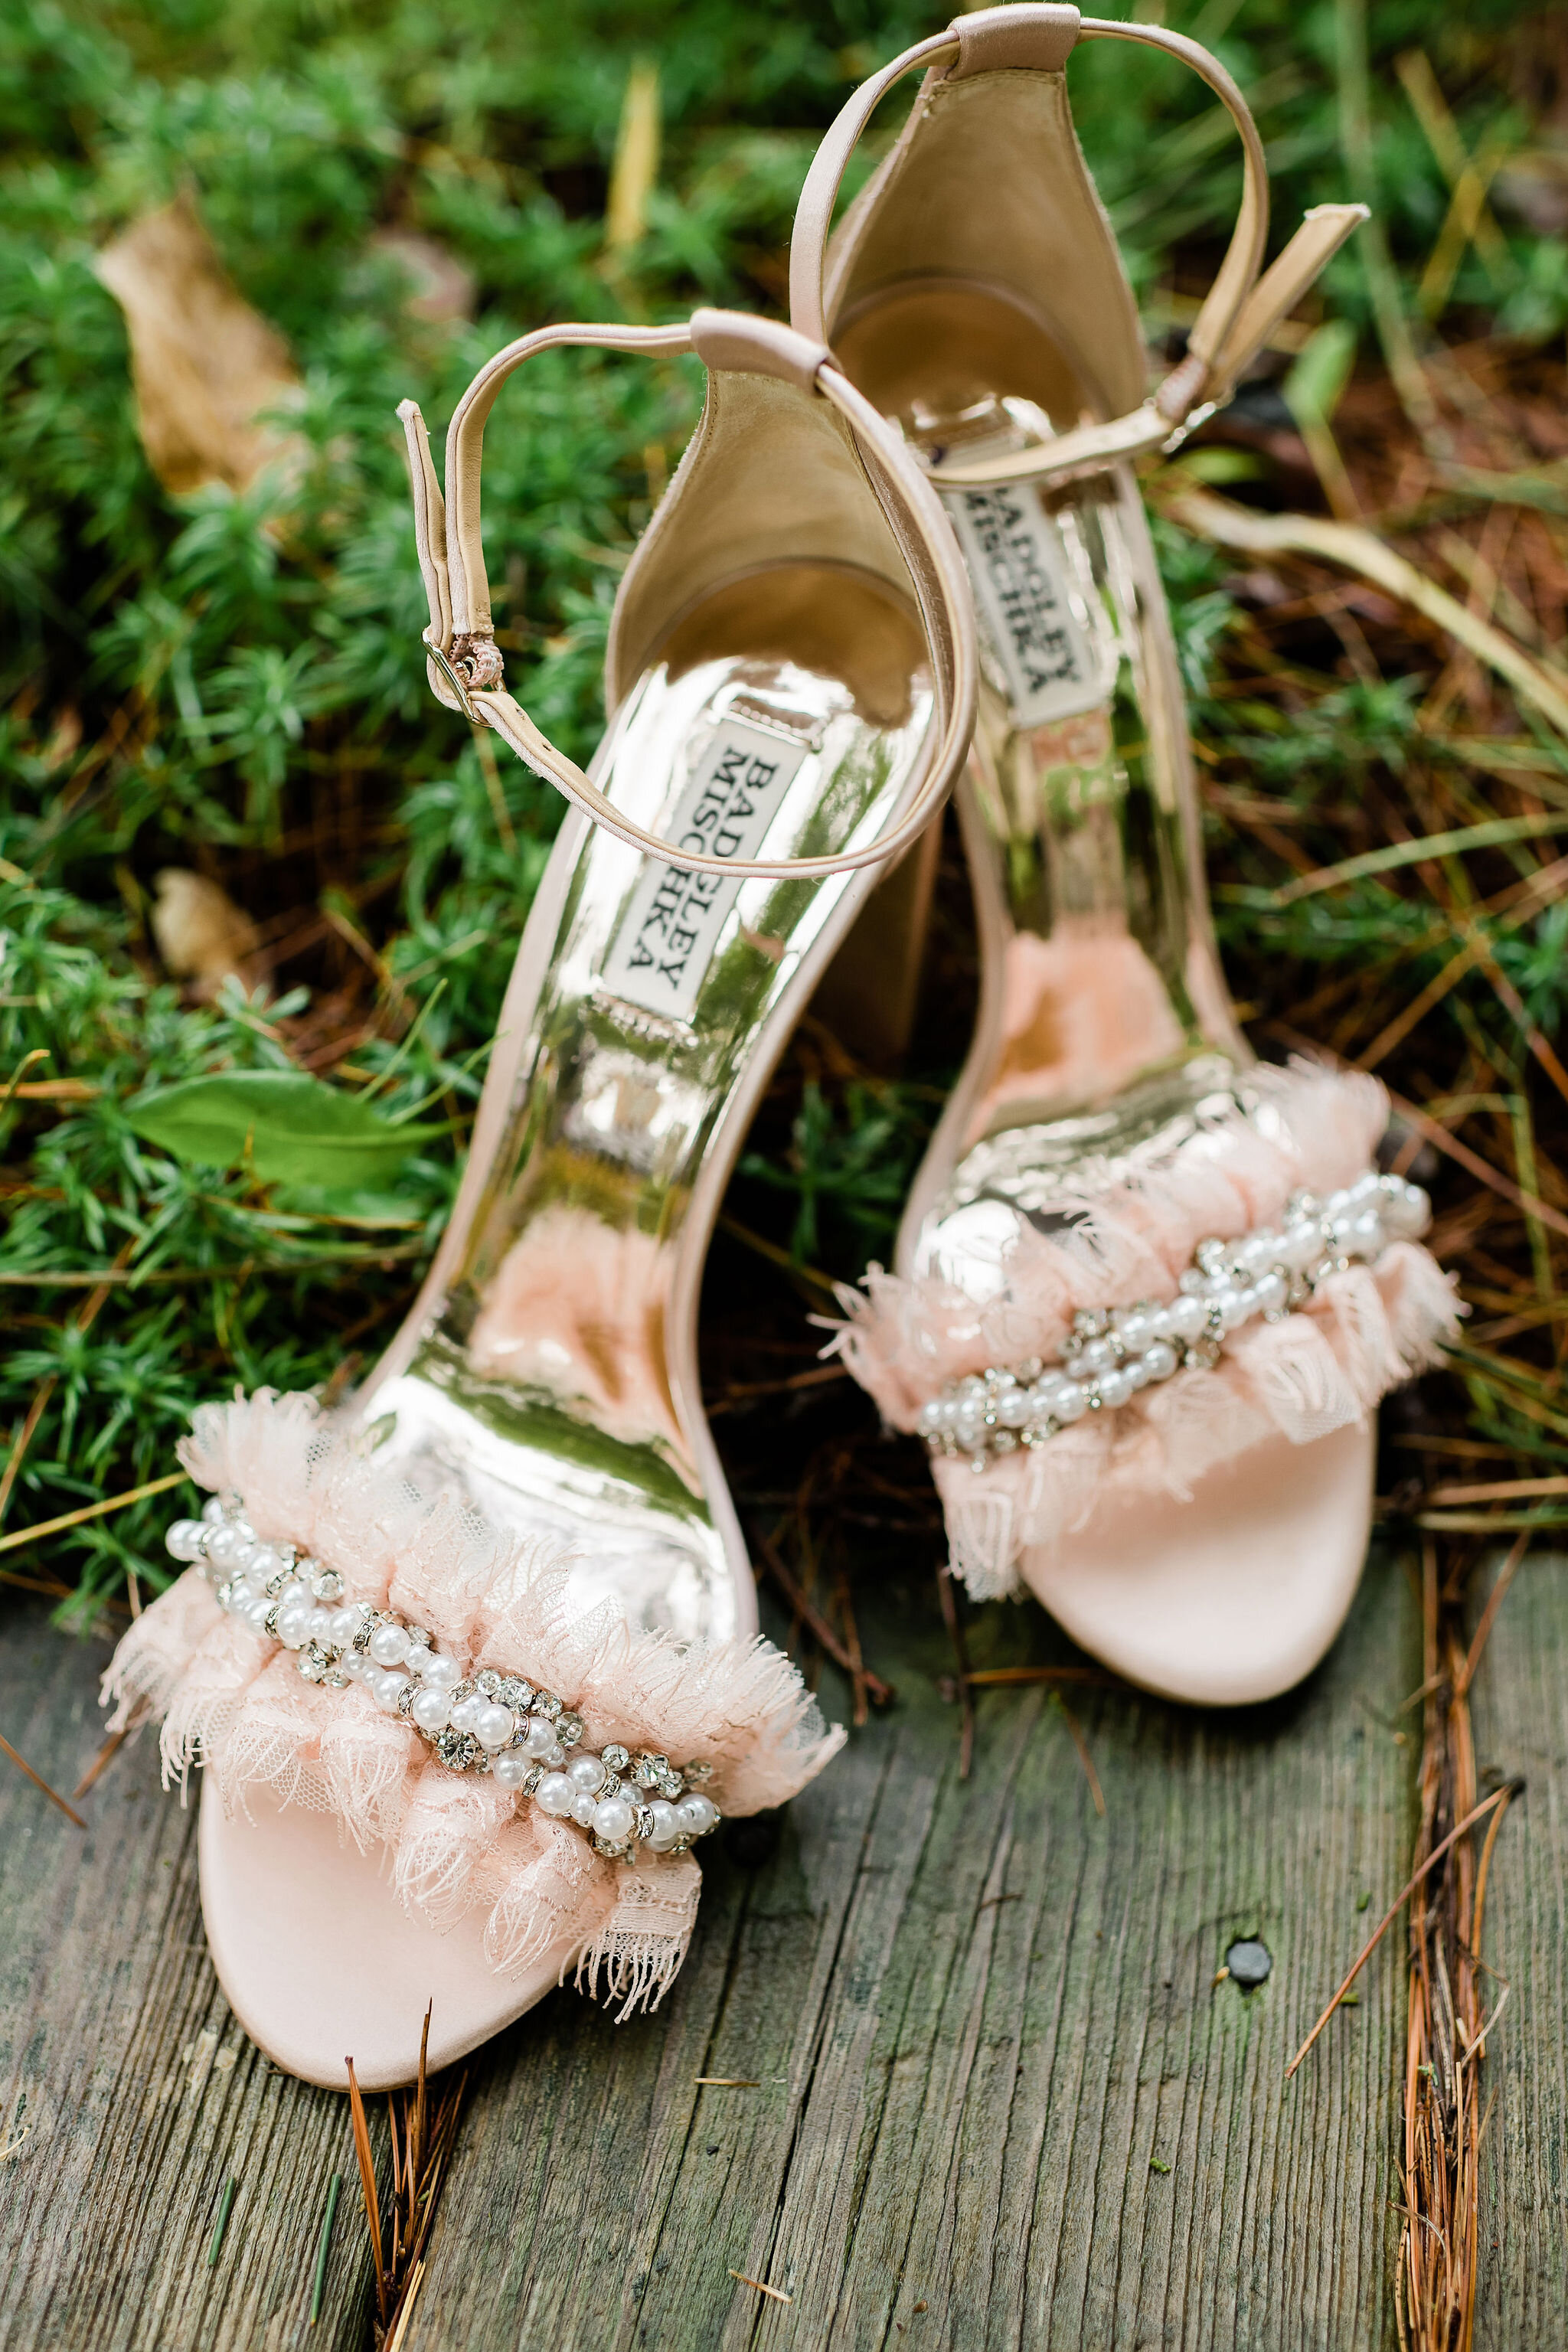 Badgley Mischka bridal shoes